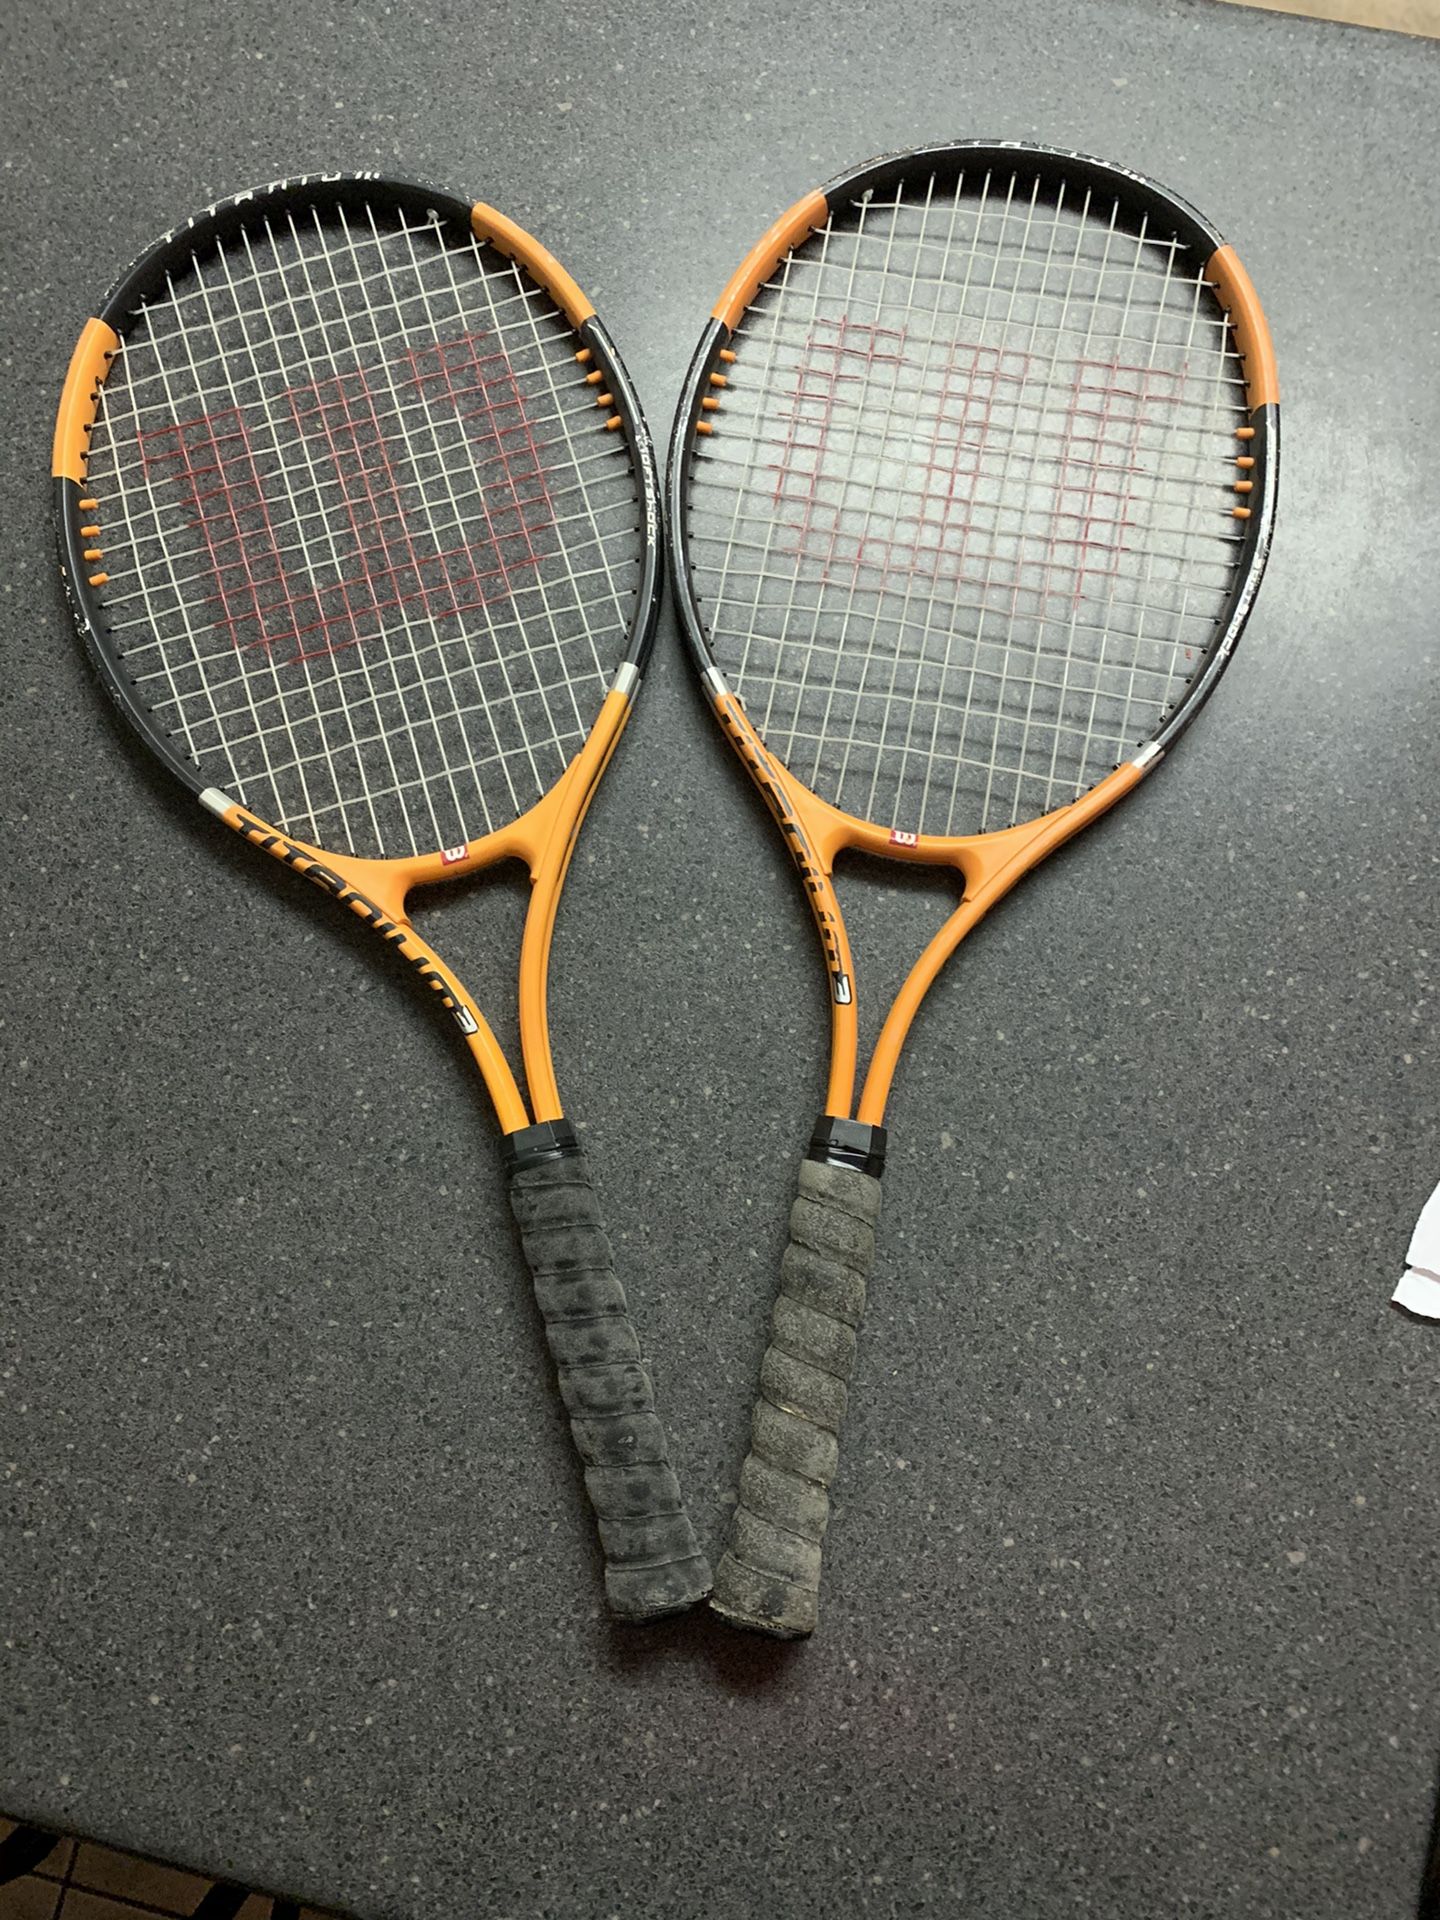 2 Wilson Softshock tennis Rackets $25